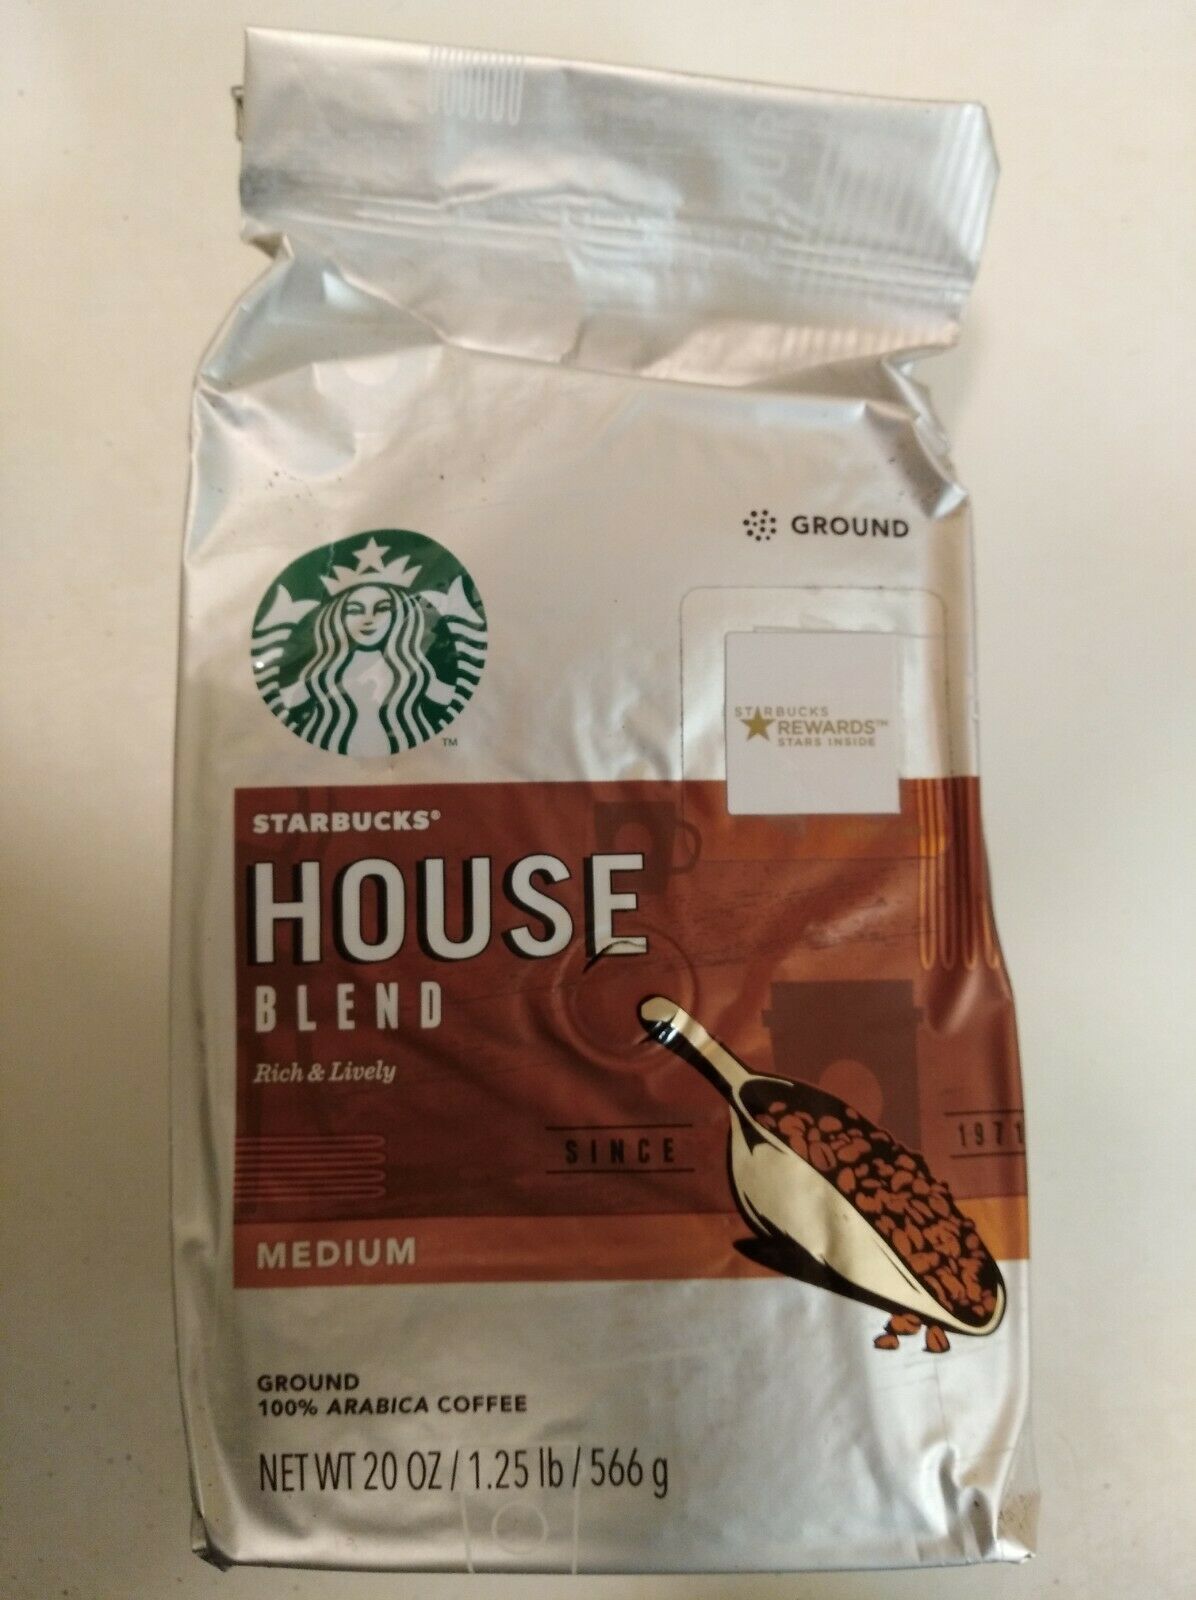 Starbucks House Blend Medium, Ground Coffee 20 oz Bag